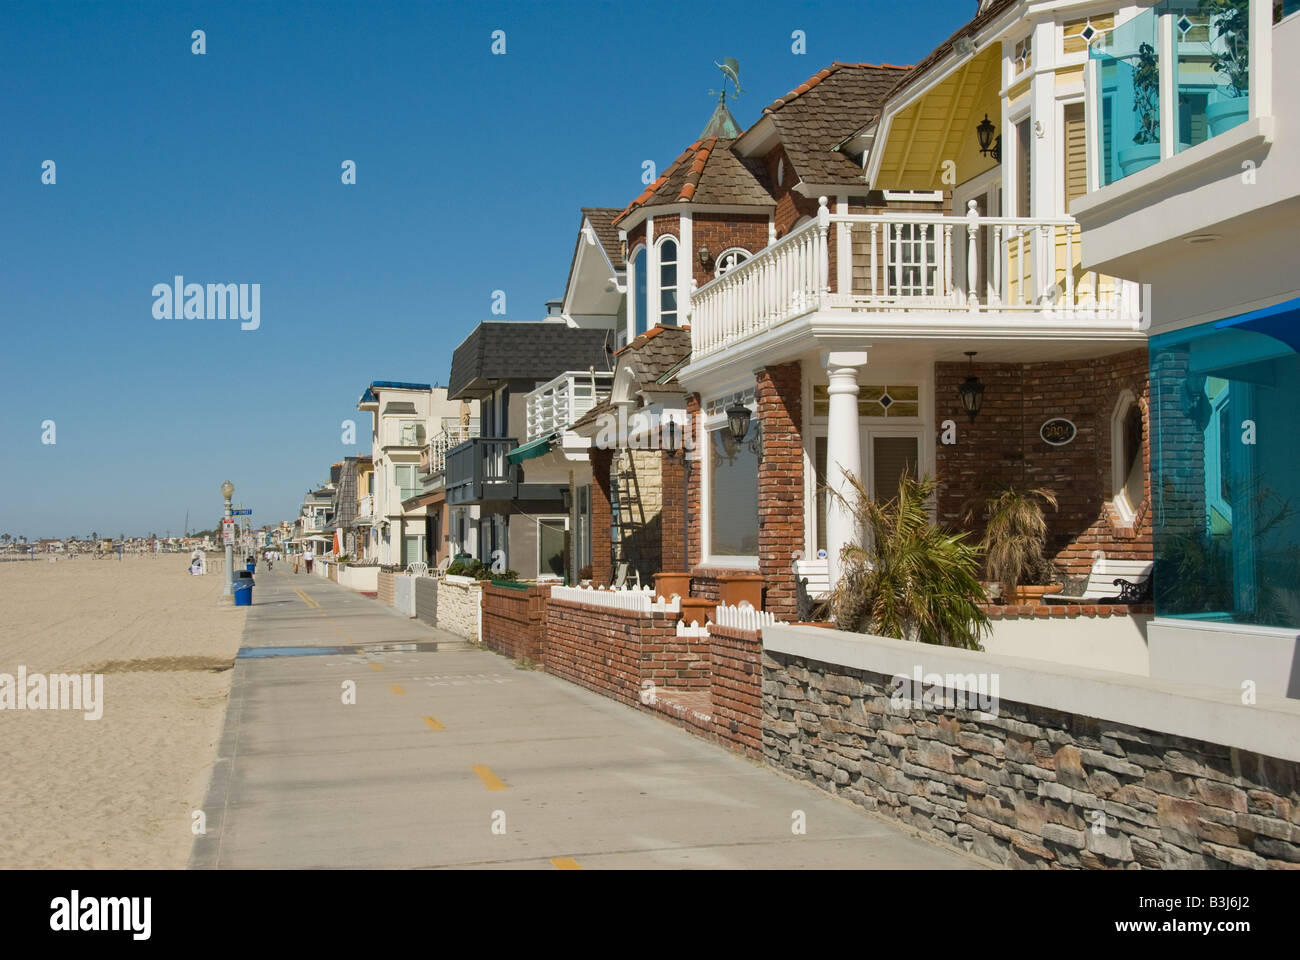 Balboa Halbinsel Strang Newport Beach, orange County, Kalifornien, ca Usa drei Meilen 5 km lang, Kalifornien Stockfoto